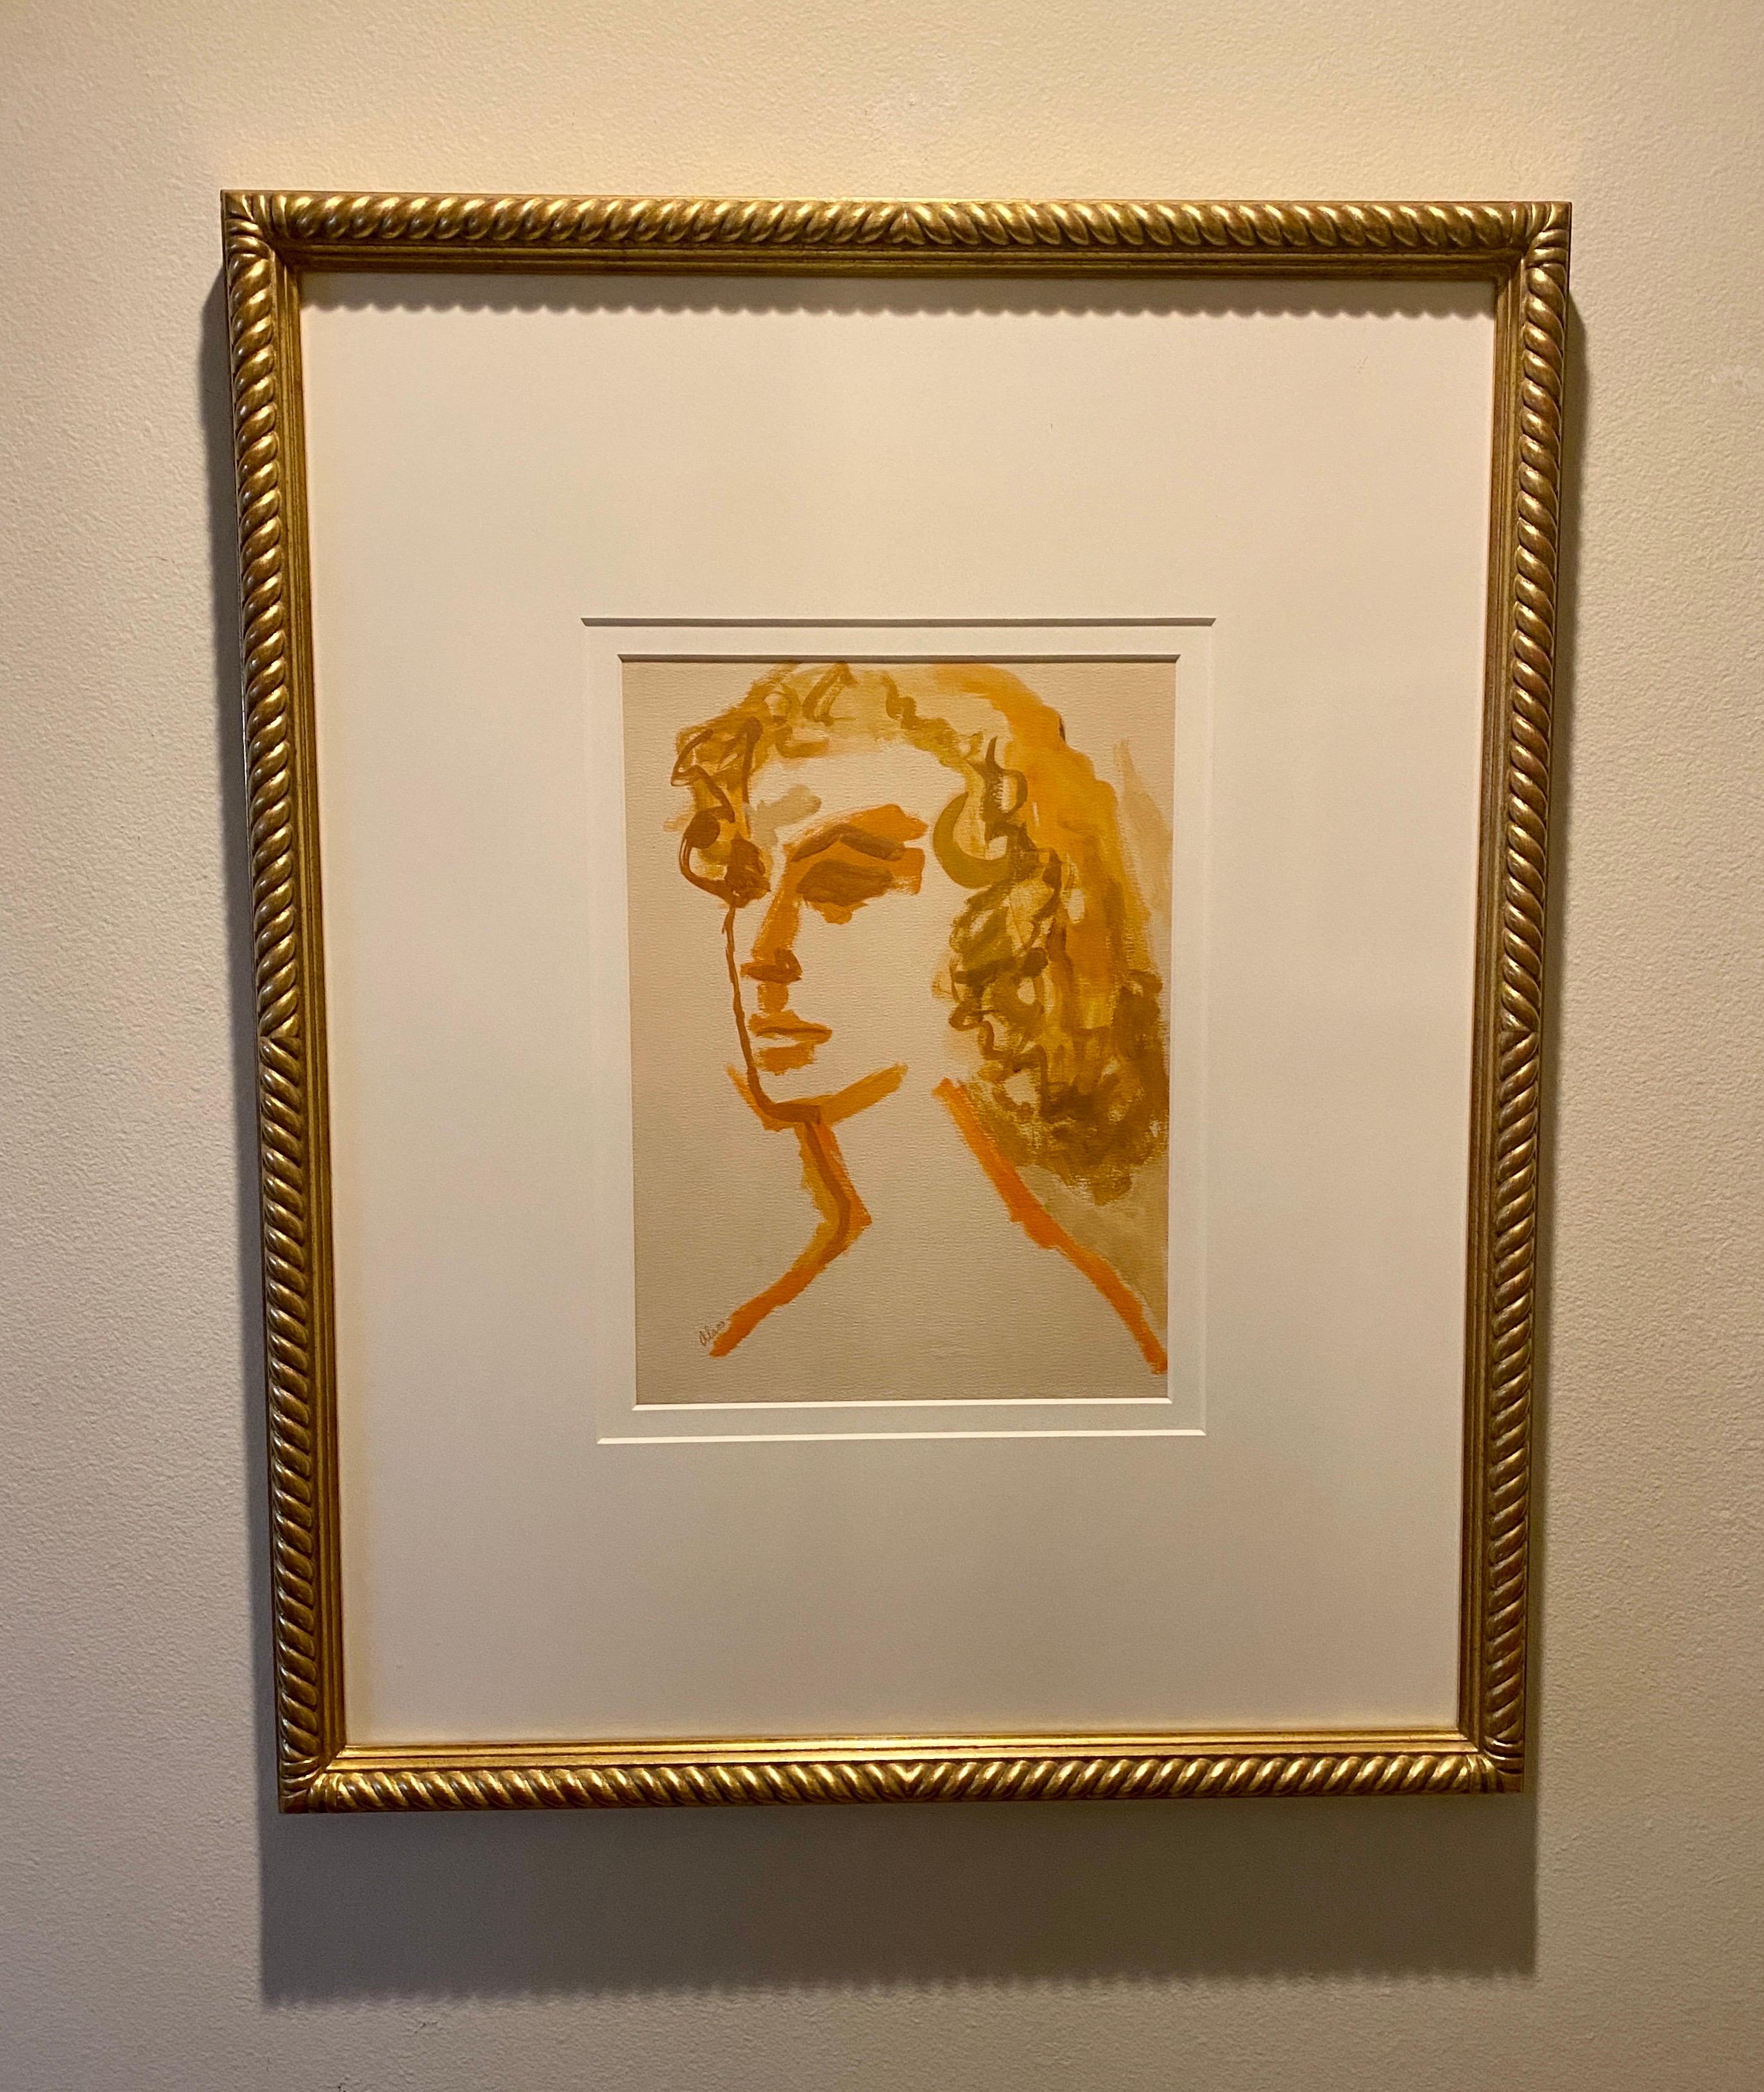 Hand-Painted Modern Portrait of a Woman Large Original Painting Gold Leaf Frame Orange Tones For Sale